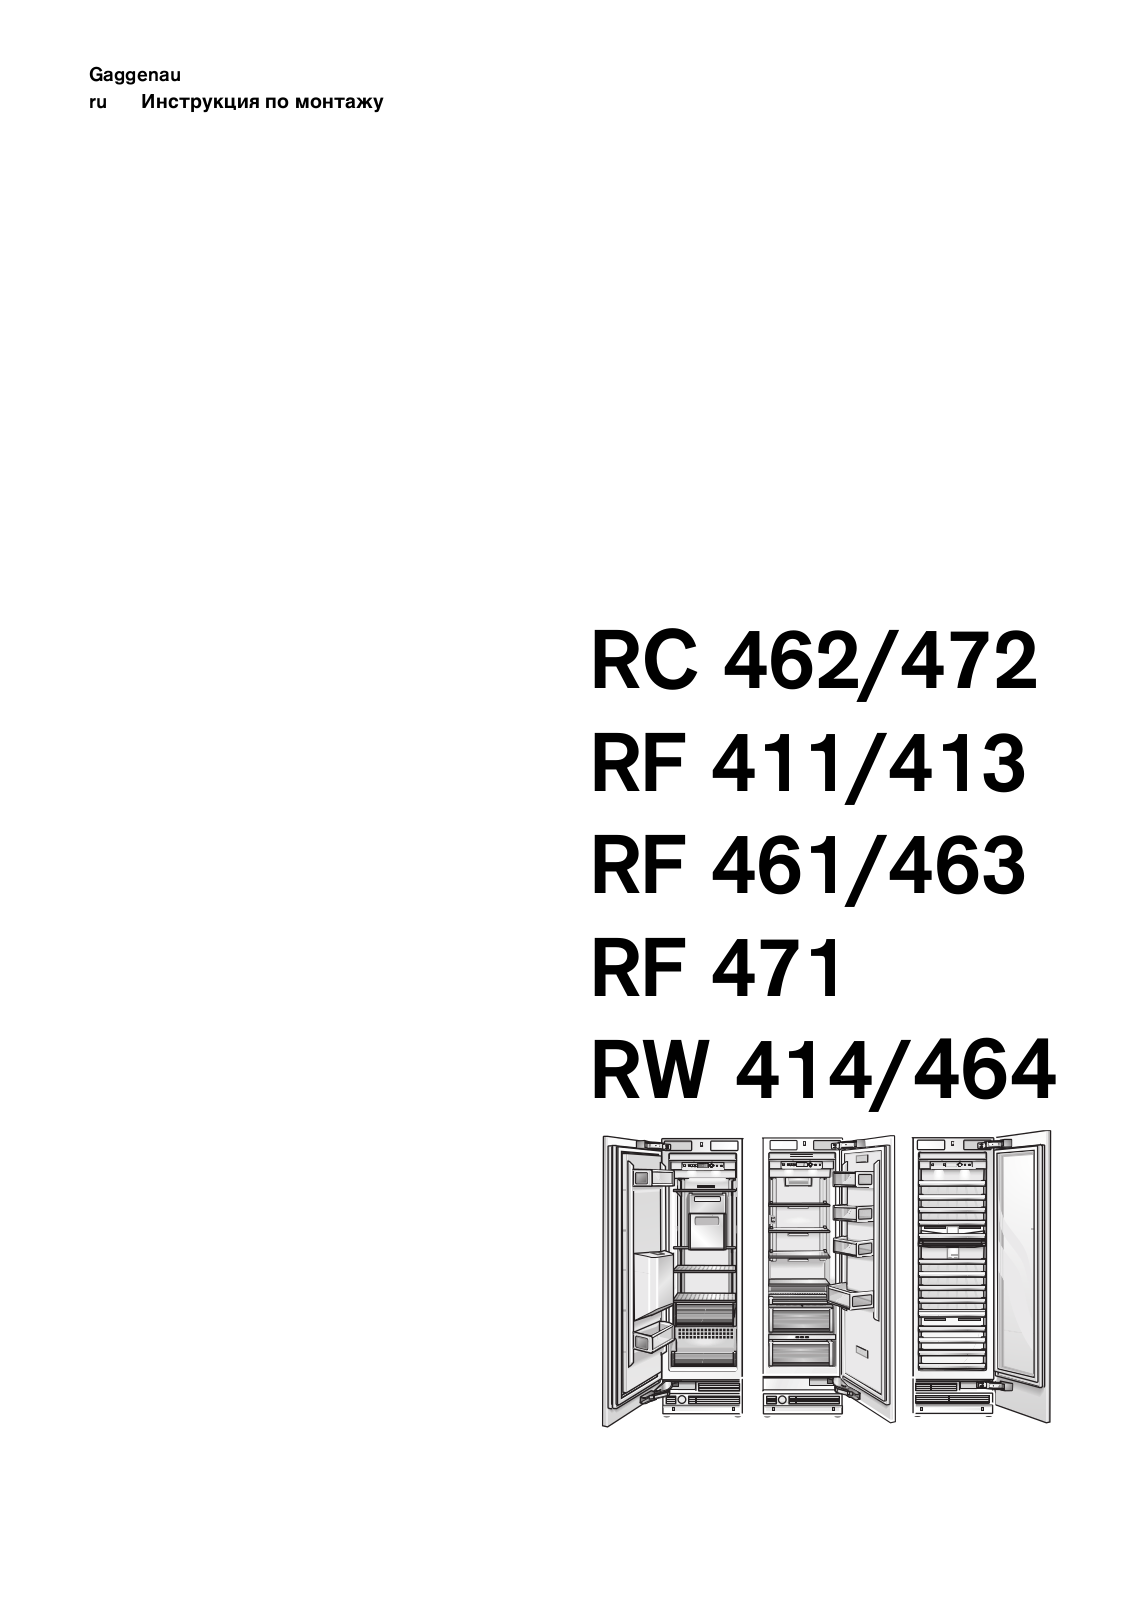 Gaggenau RF 413-203, RF 413-301, RF 463-202, RF 463-203, RF 463-300 User Manual